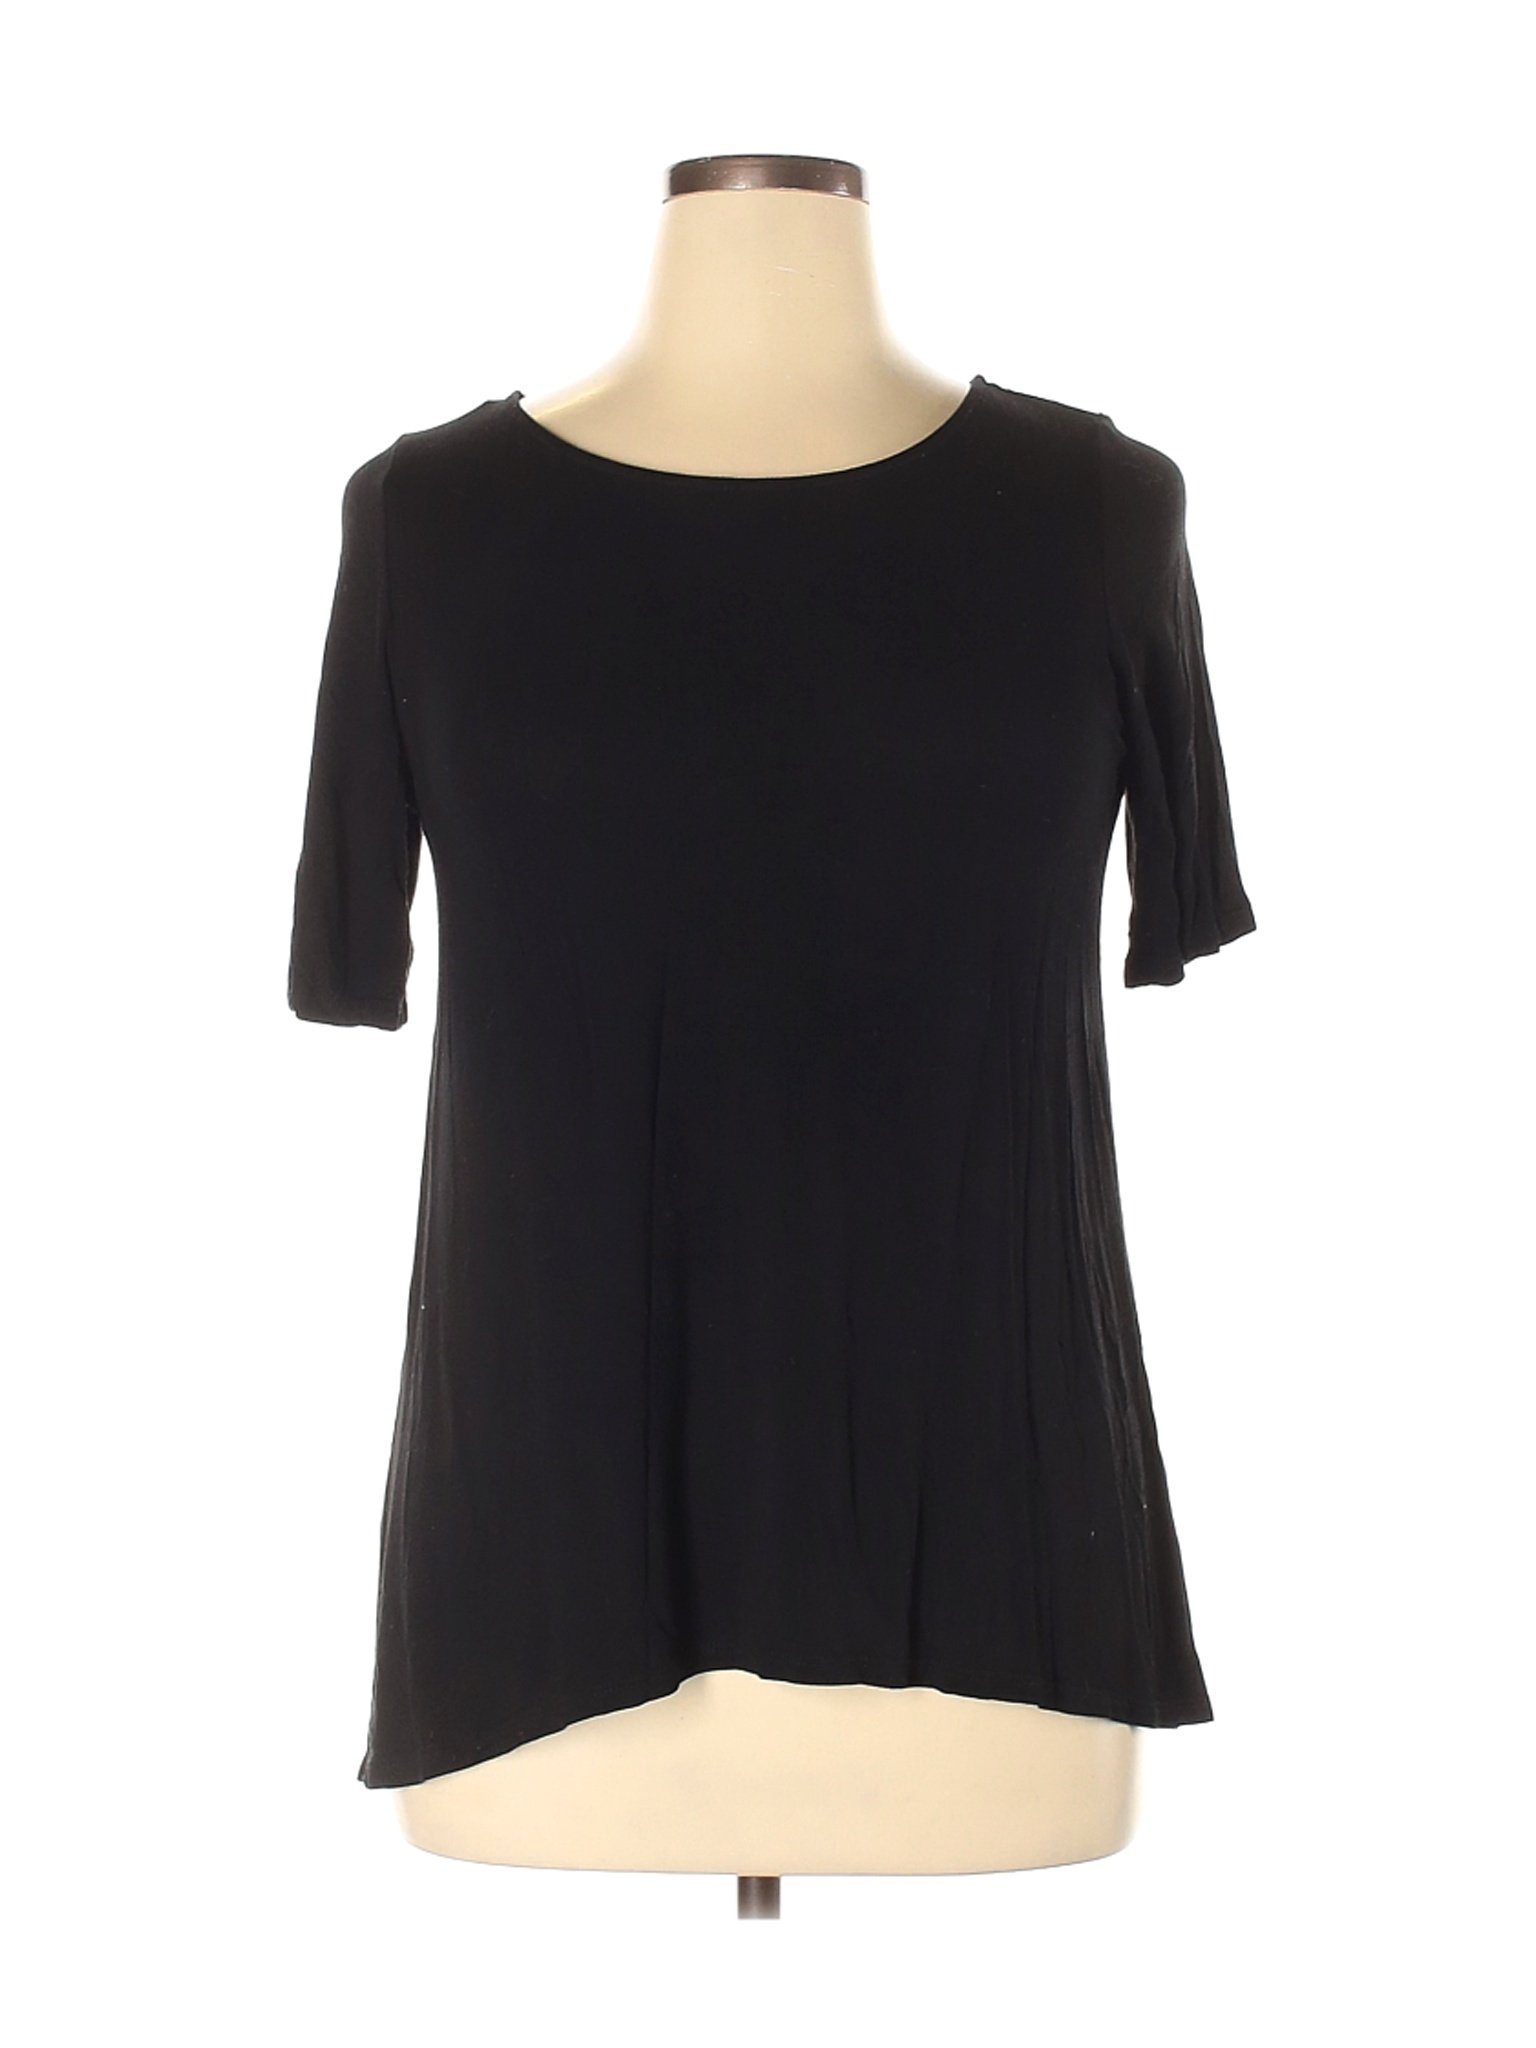 Kim & Cami Women Black Short Sleeve Top 1X Plus | eBay